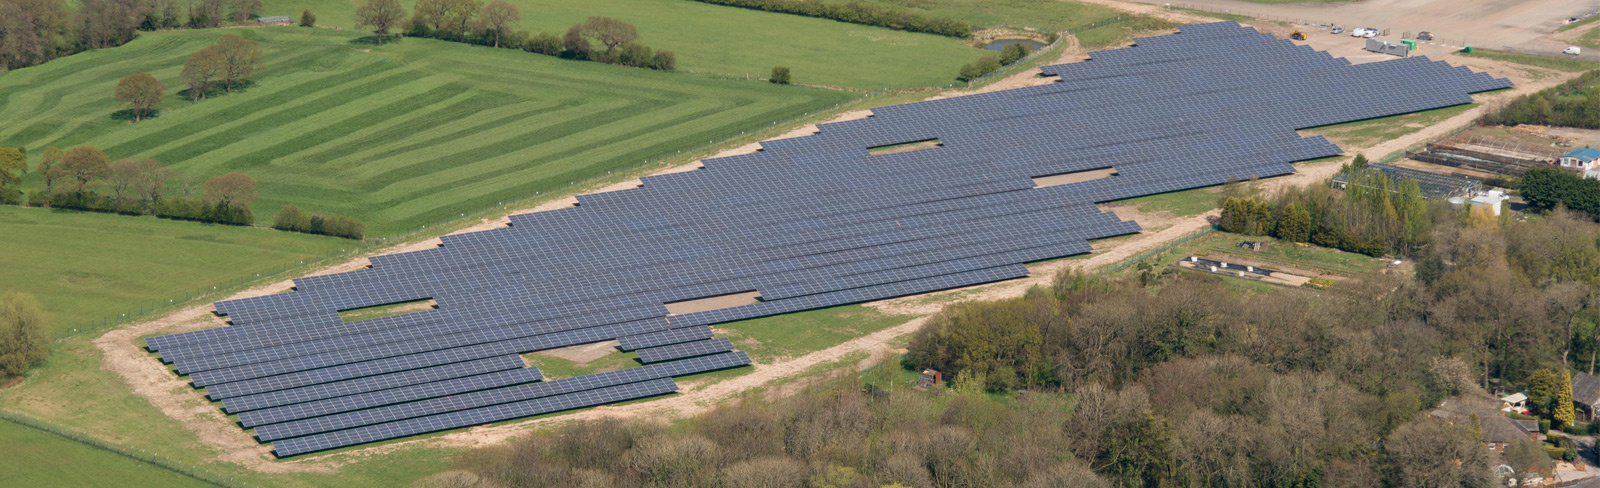 Image - Solar Panel Farm